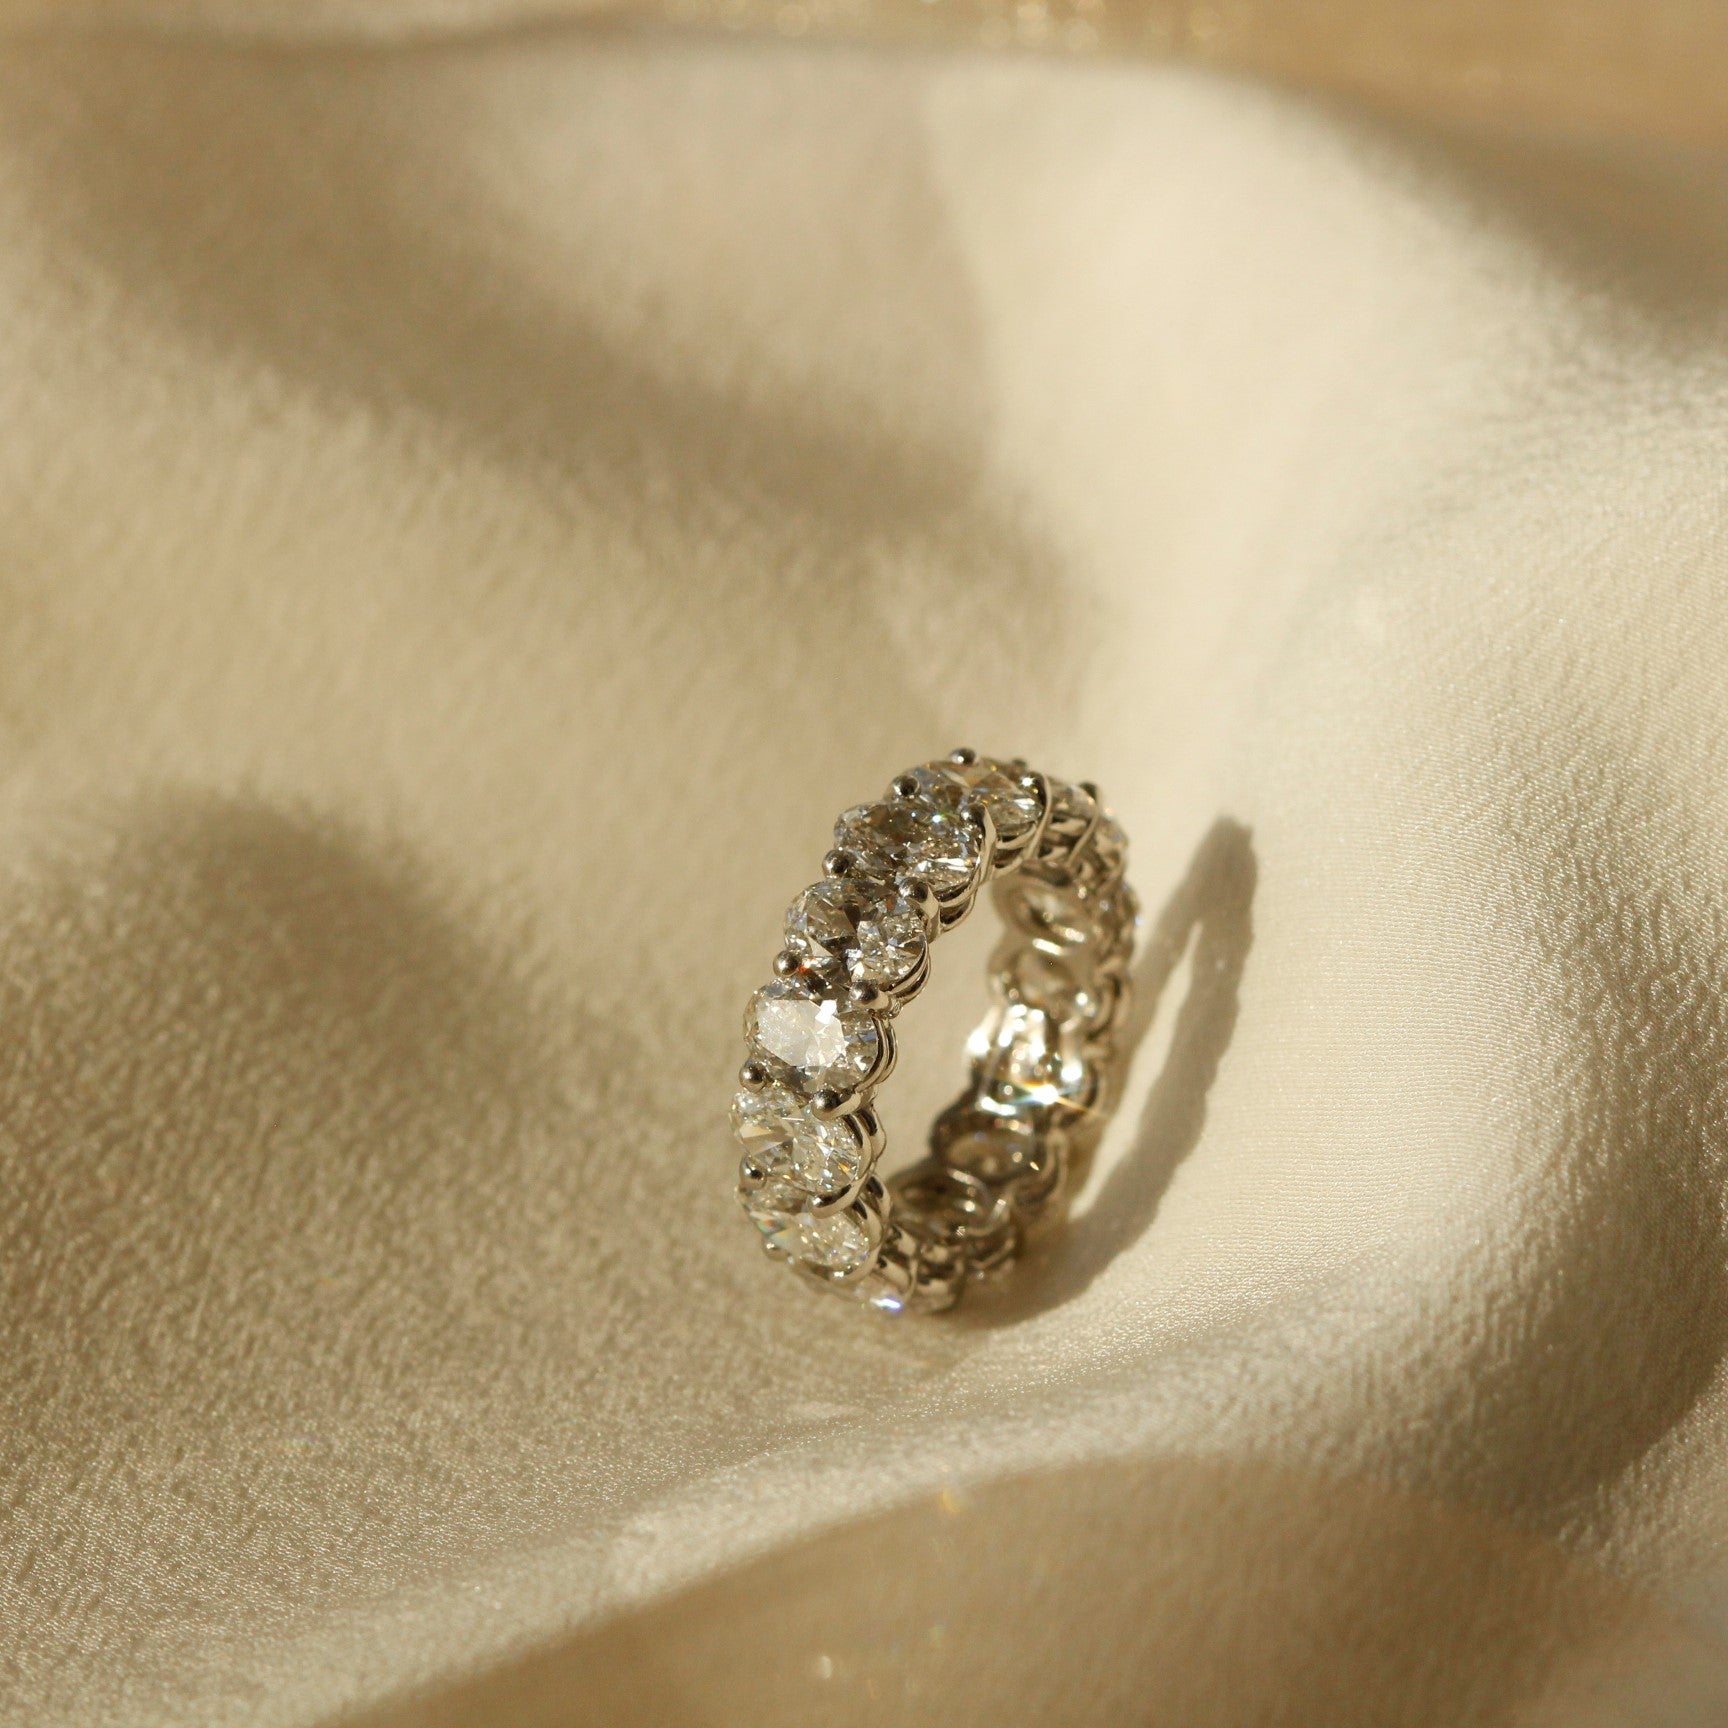 Diamond Eternity Ring with oval brilliant cut diamonds in Platinum on Fabric